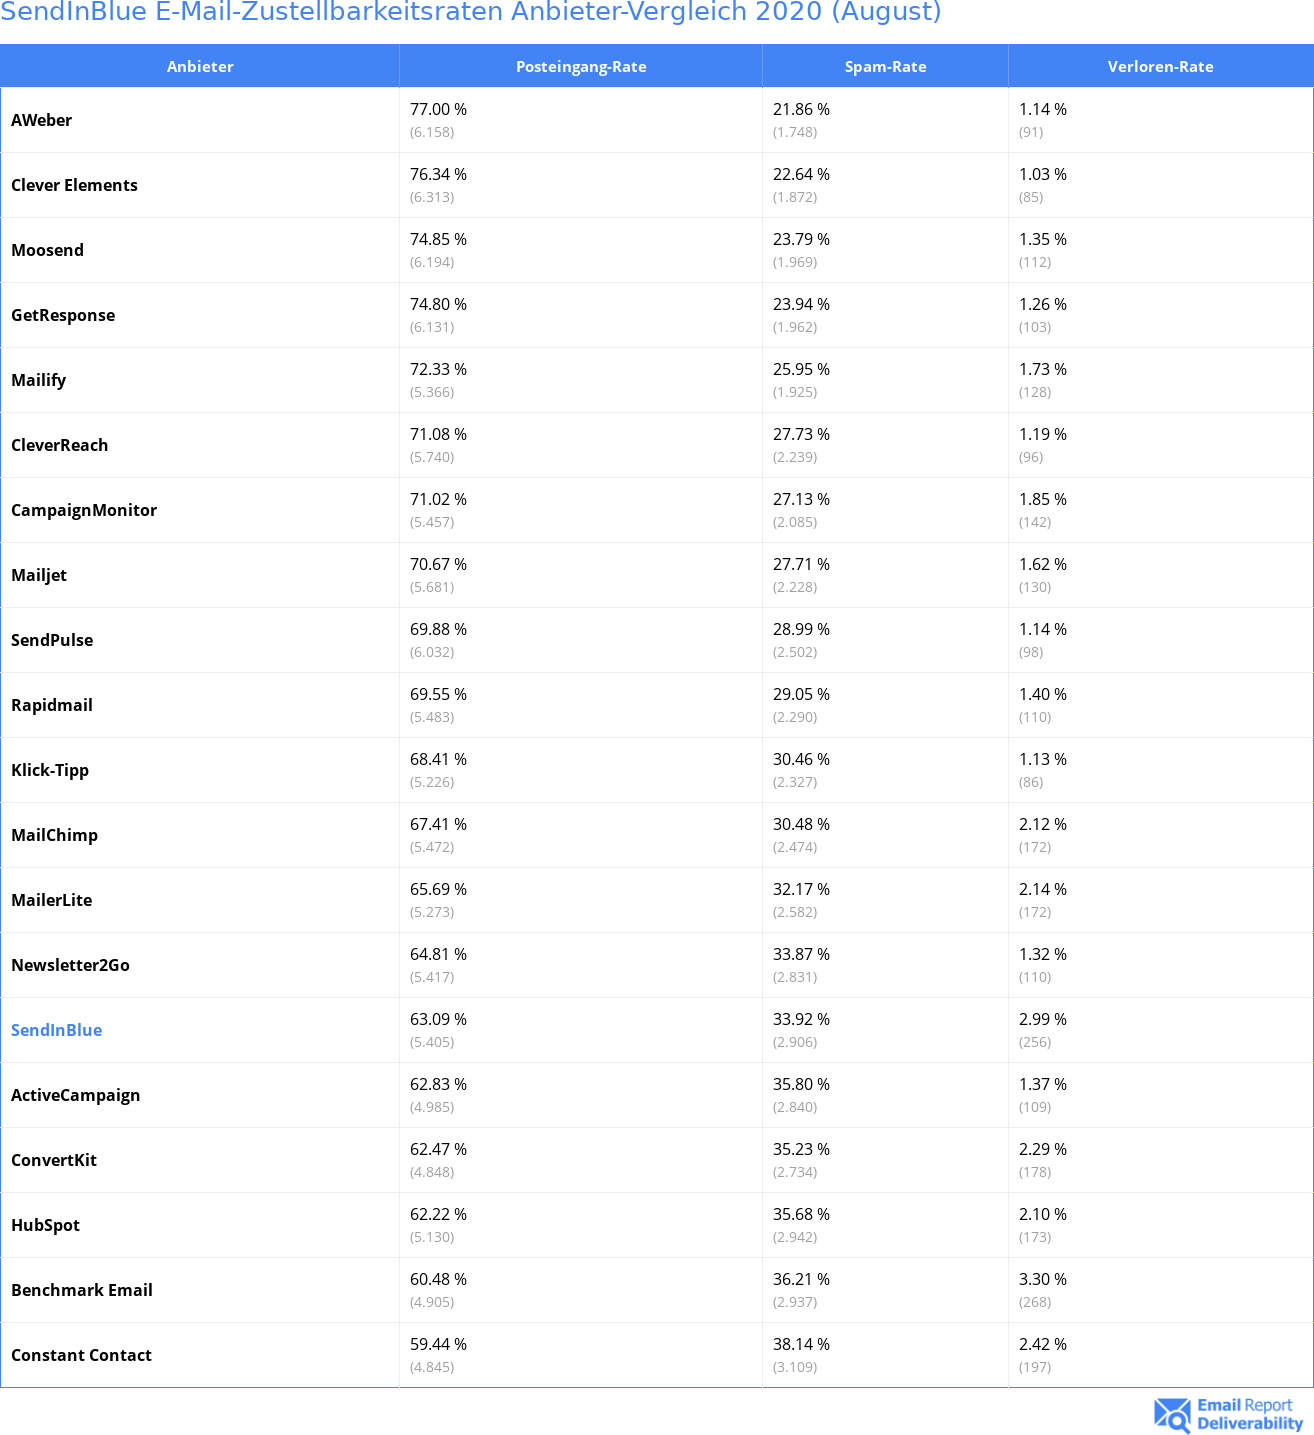 SendInBlue E-Mail-Zustellbarkeitsraten Anbieter-Vergleich 2020 (August)